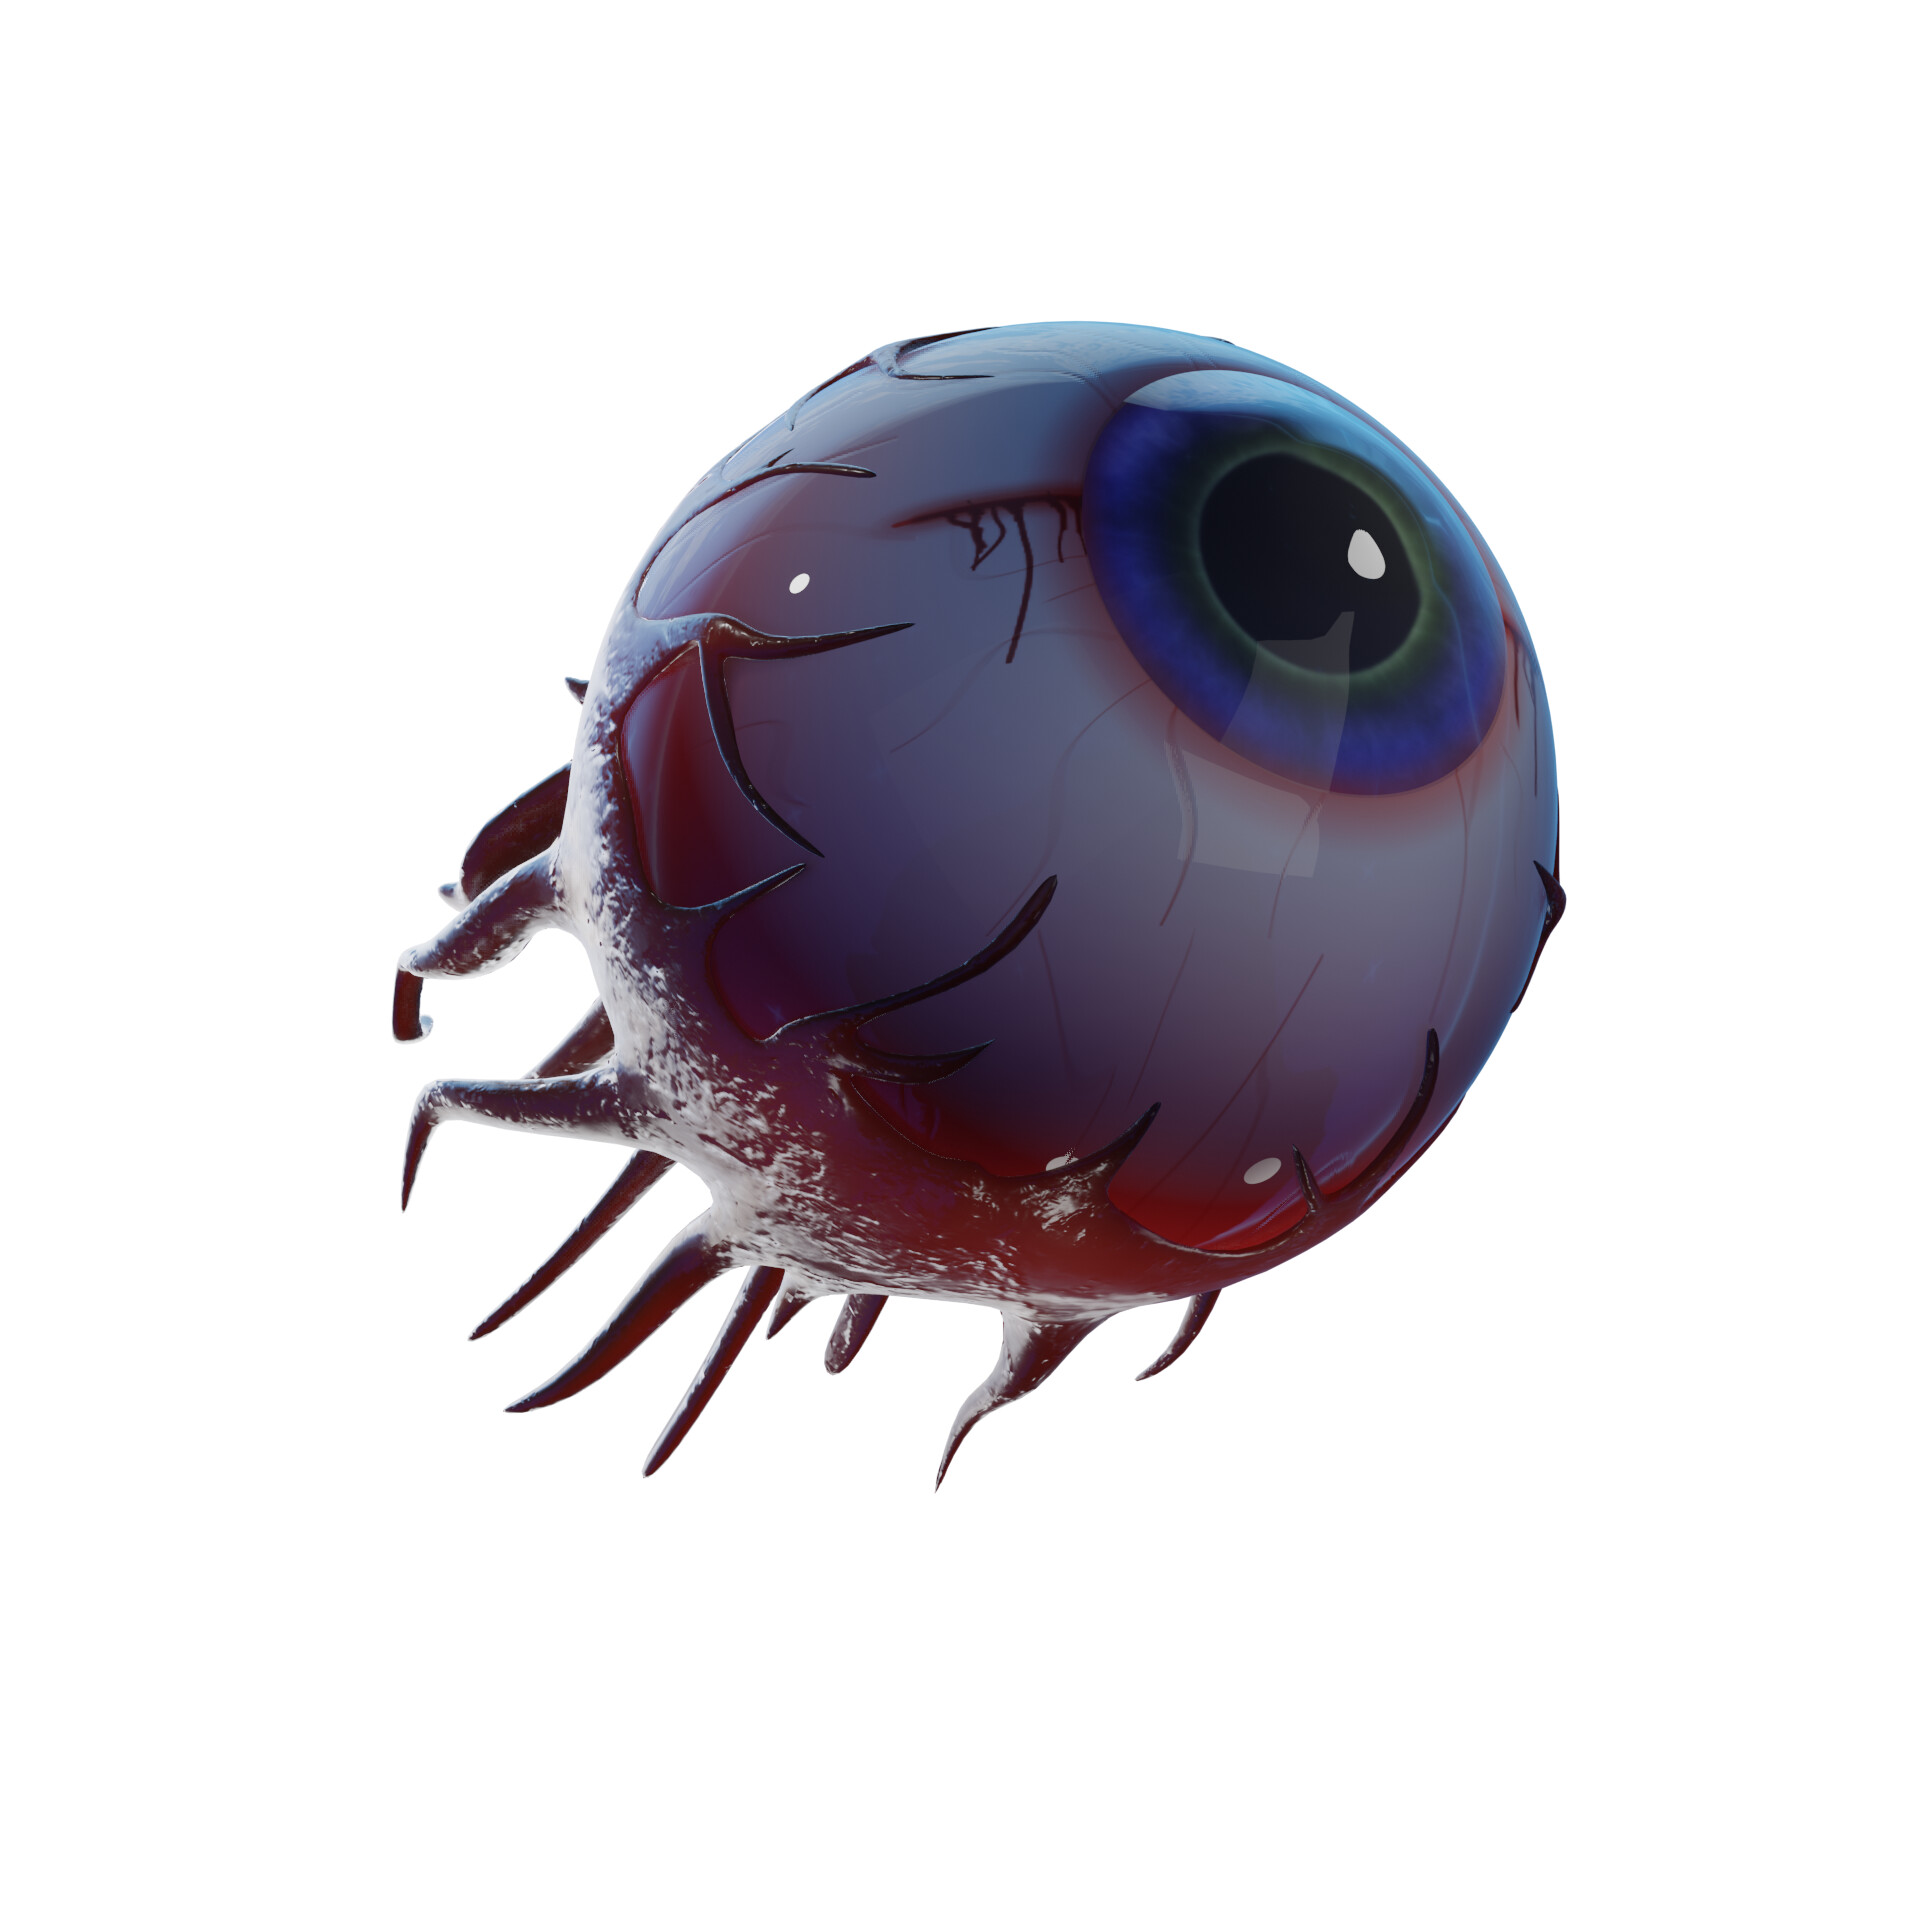 Eye of Cthulhu – Terraria - Pockethost